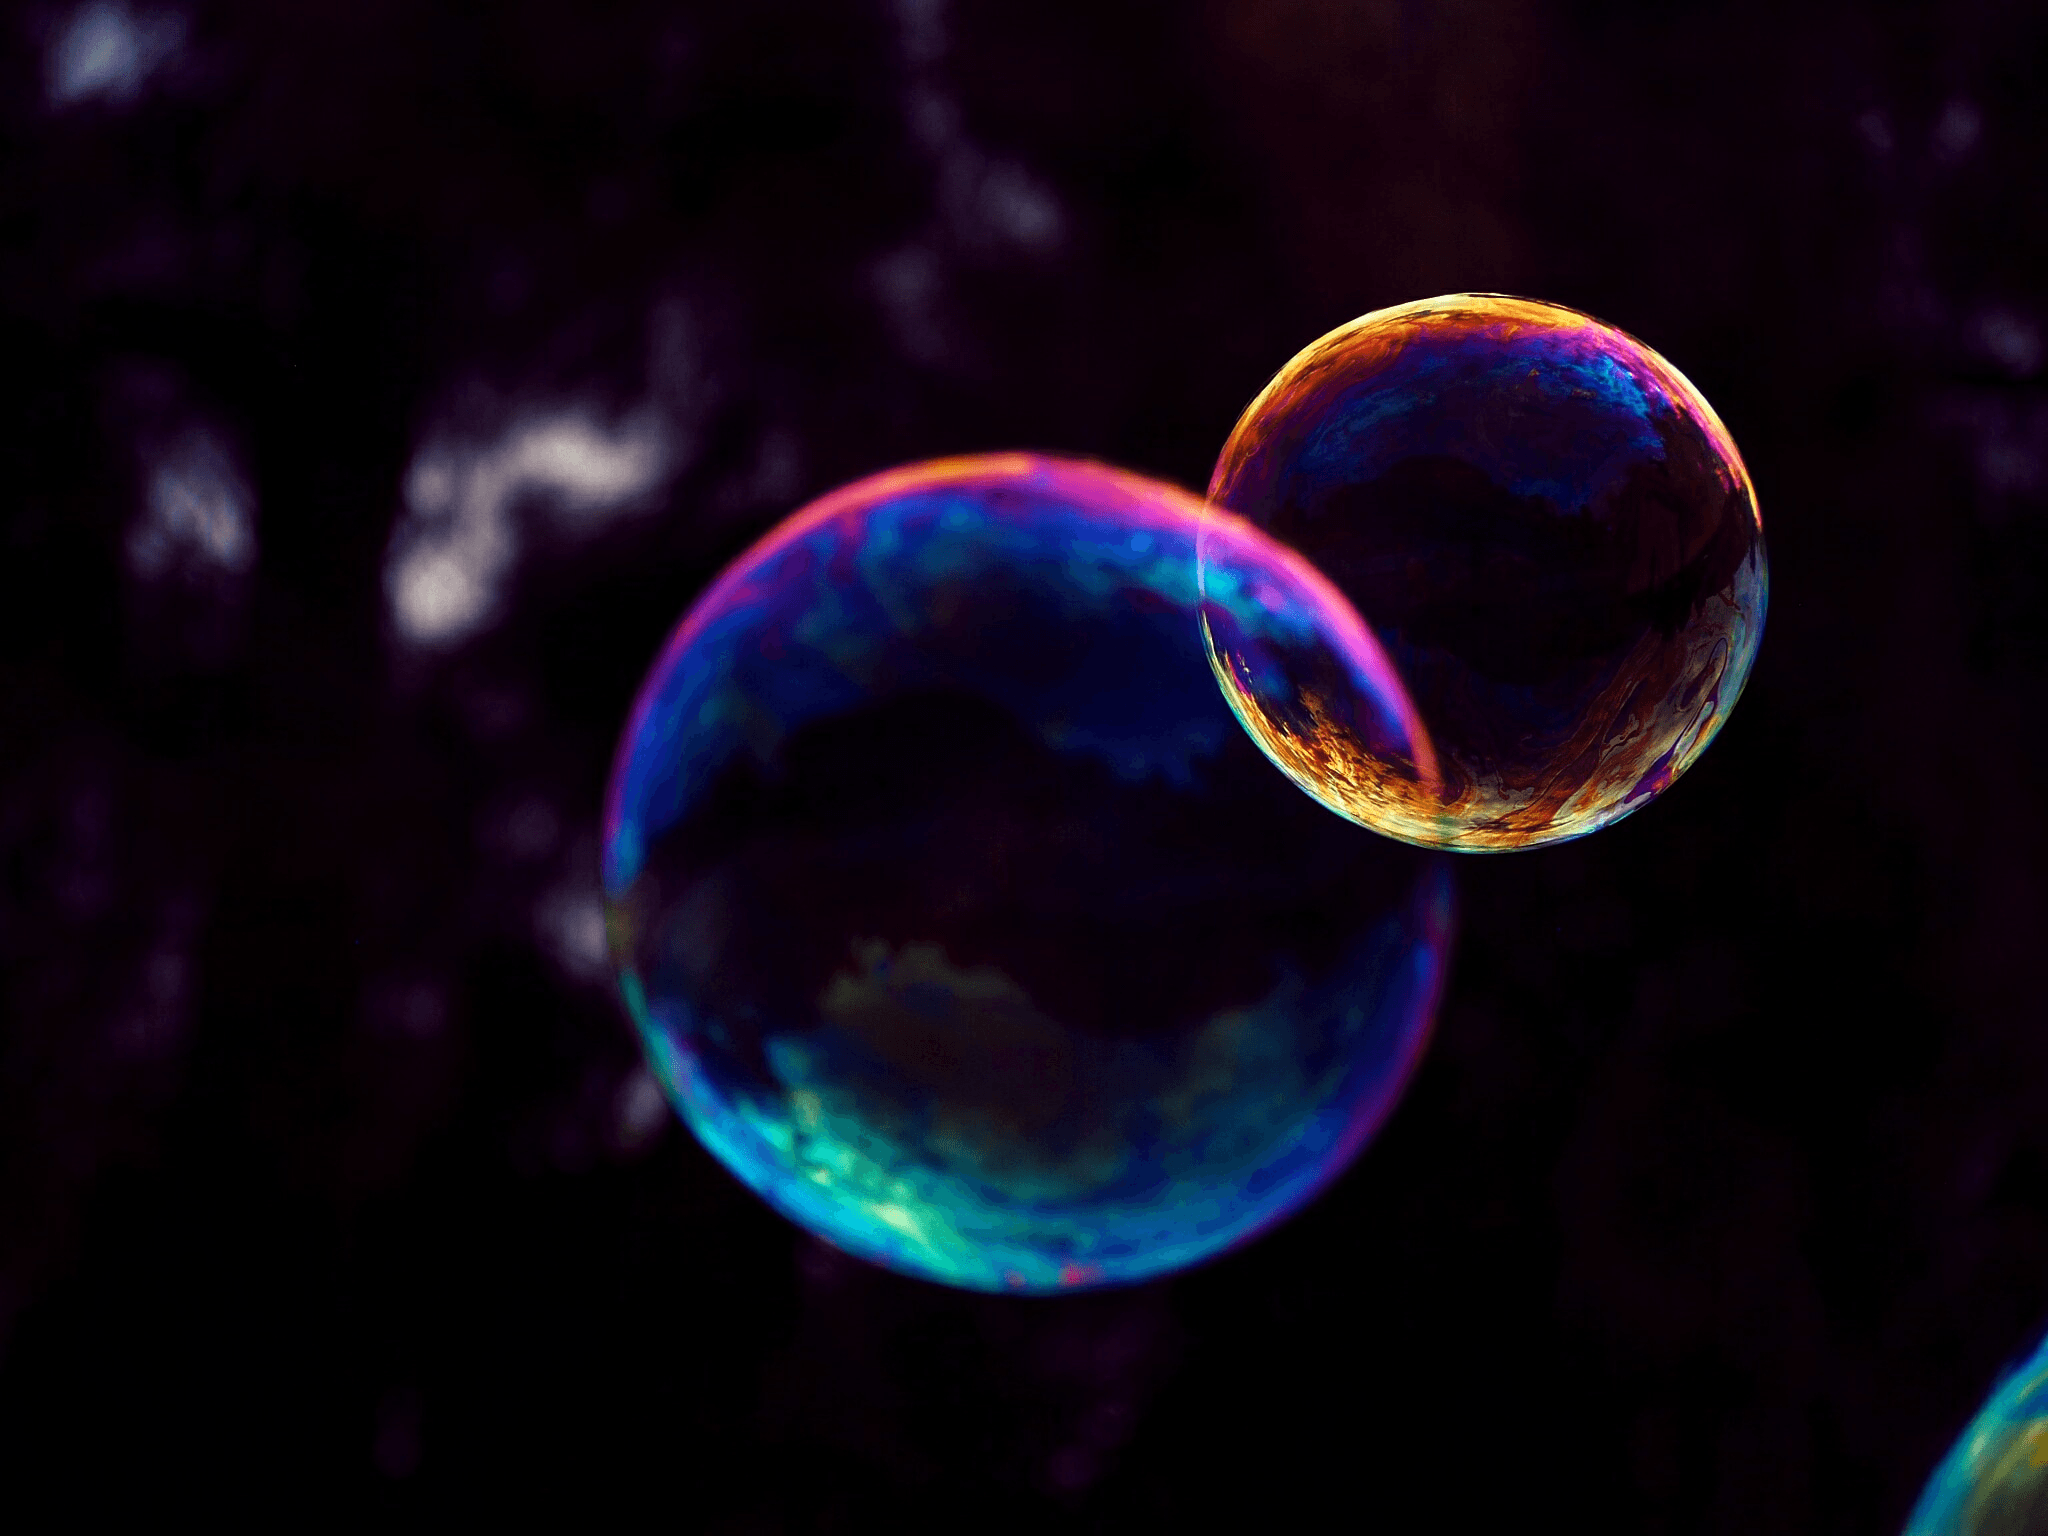 Differences, bubbles.